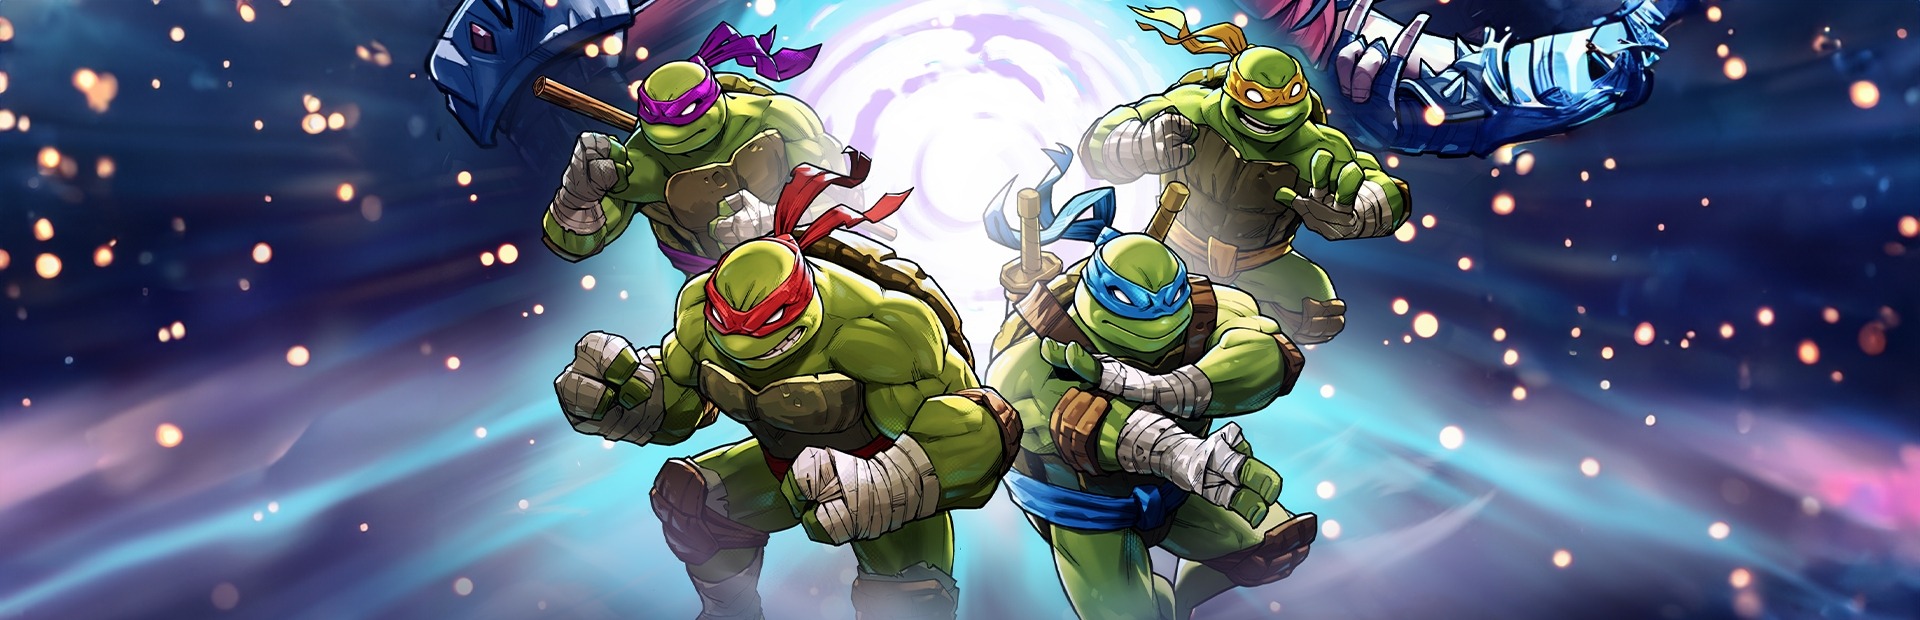 Las Tortugas Ninja: El destino de Splinter Switch